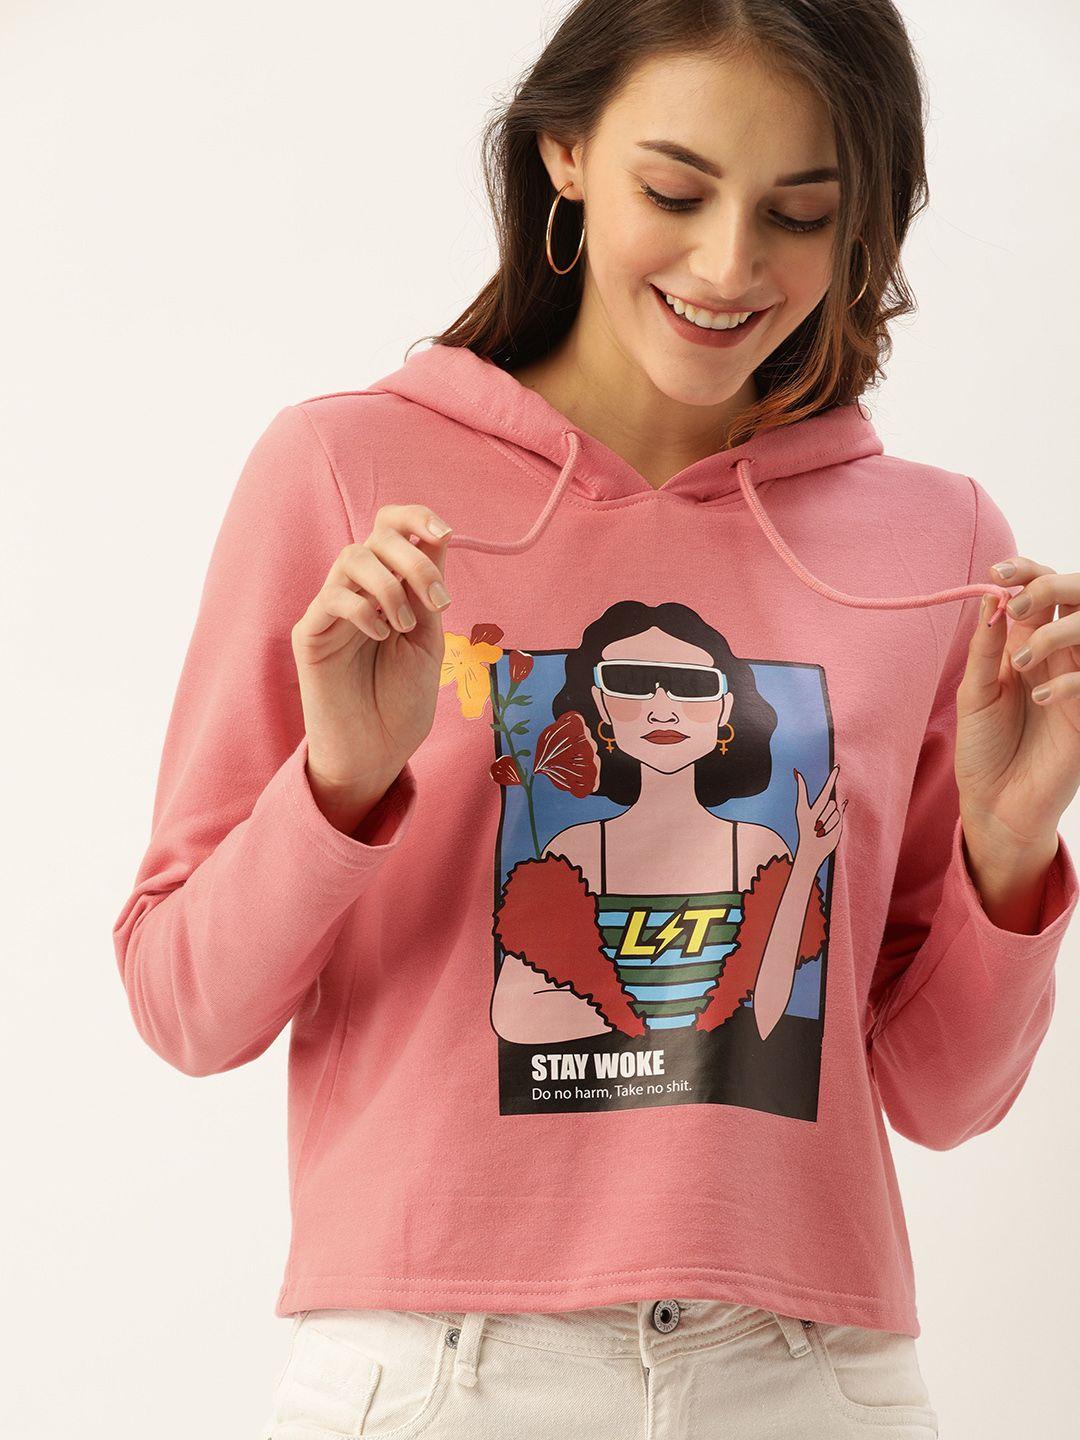 dressberry-women-rust-pink-graphic-printed-hooded-sweatshirt